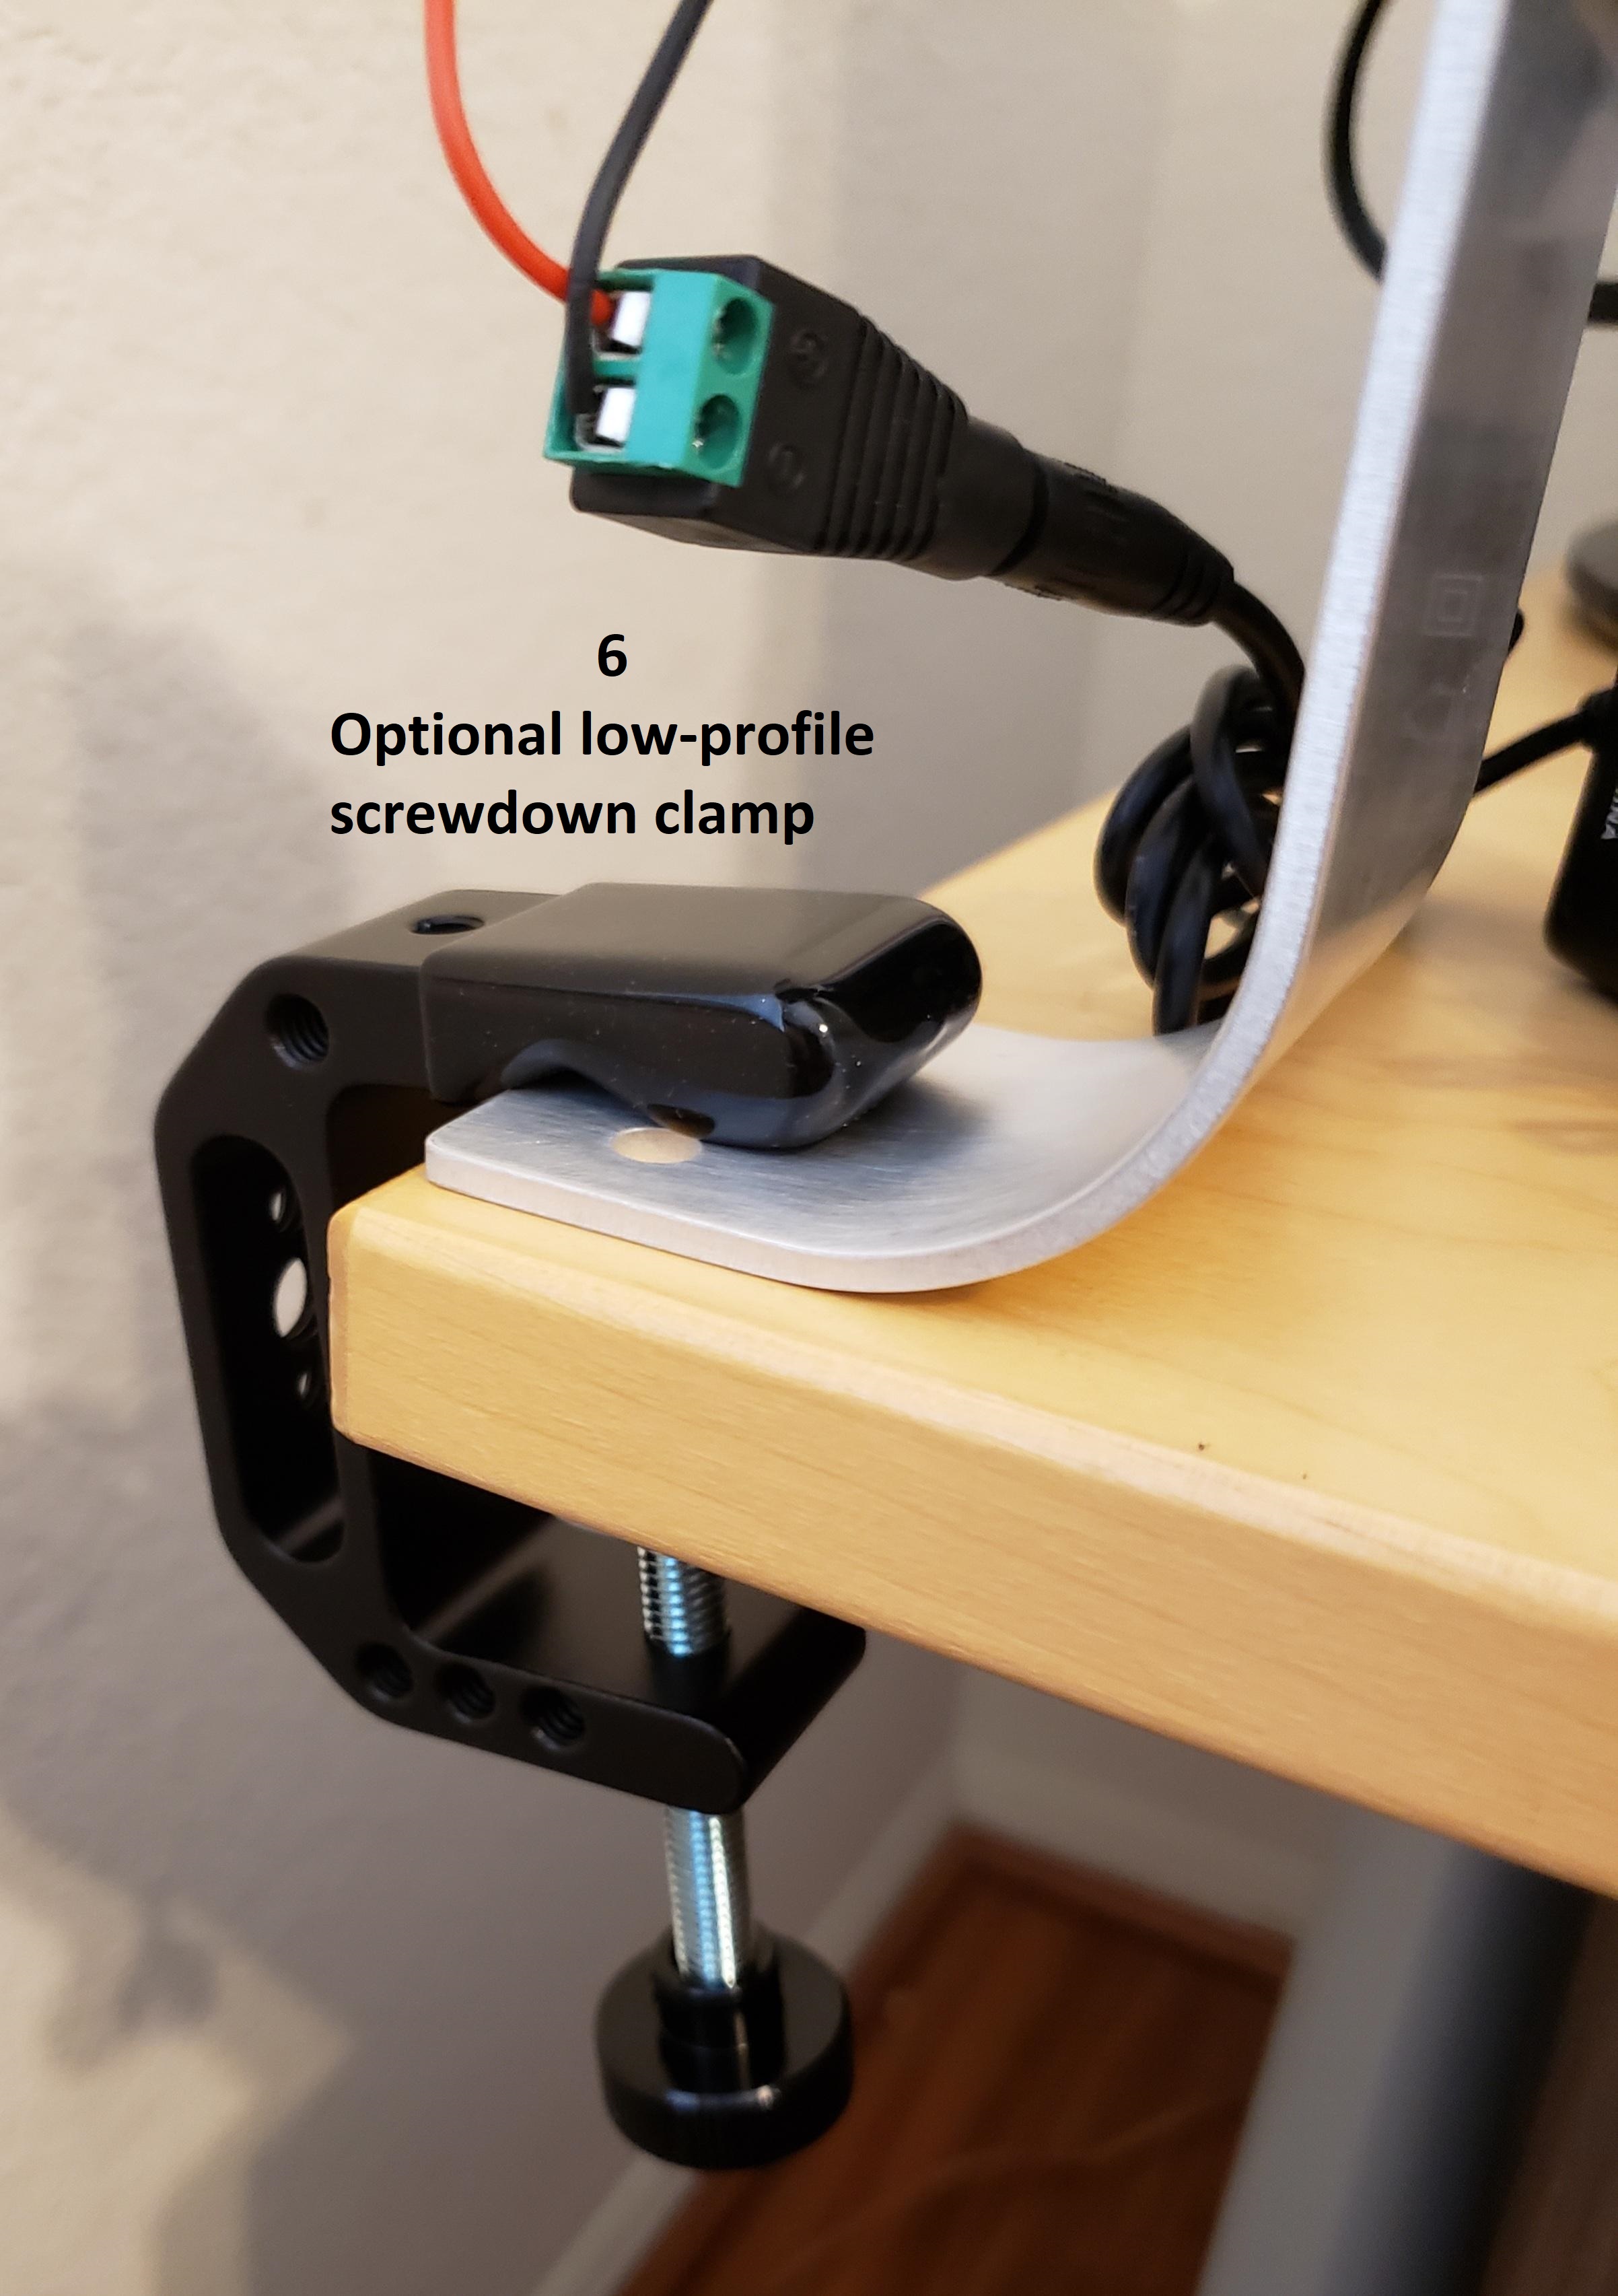 Low-profile clamp option